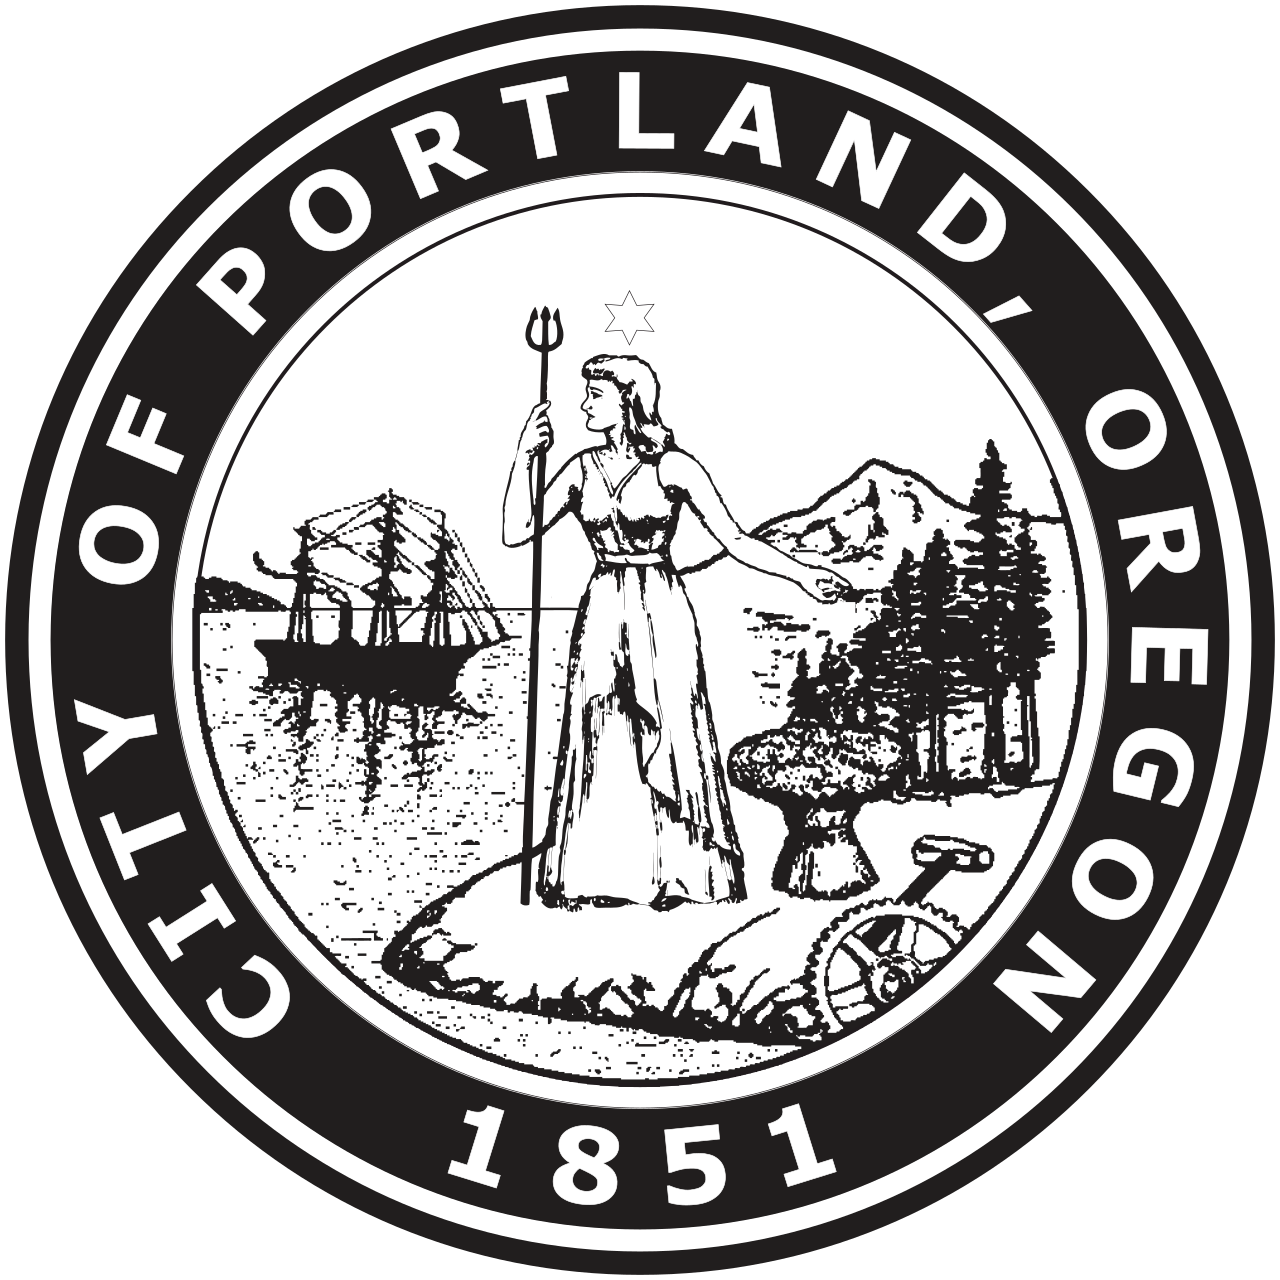 Some good news from Portland Water Bureau.